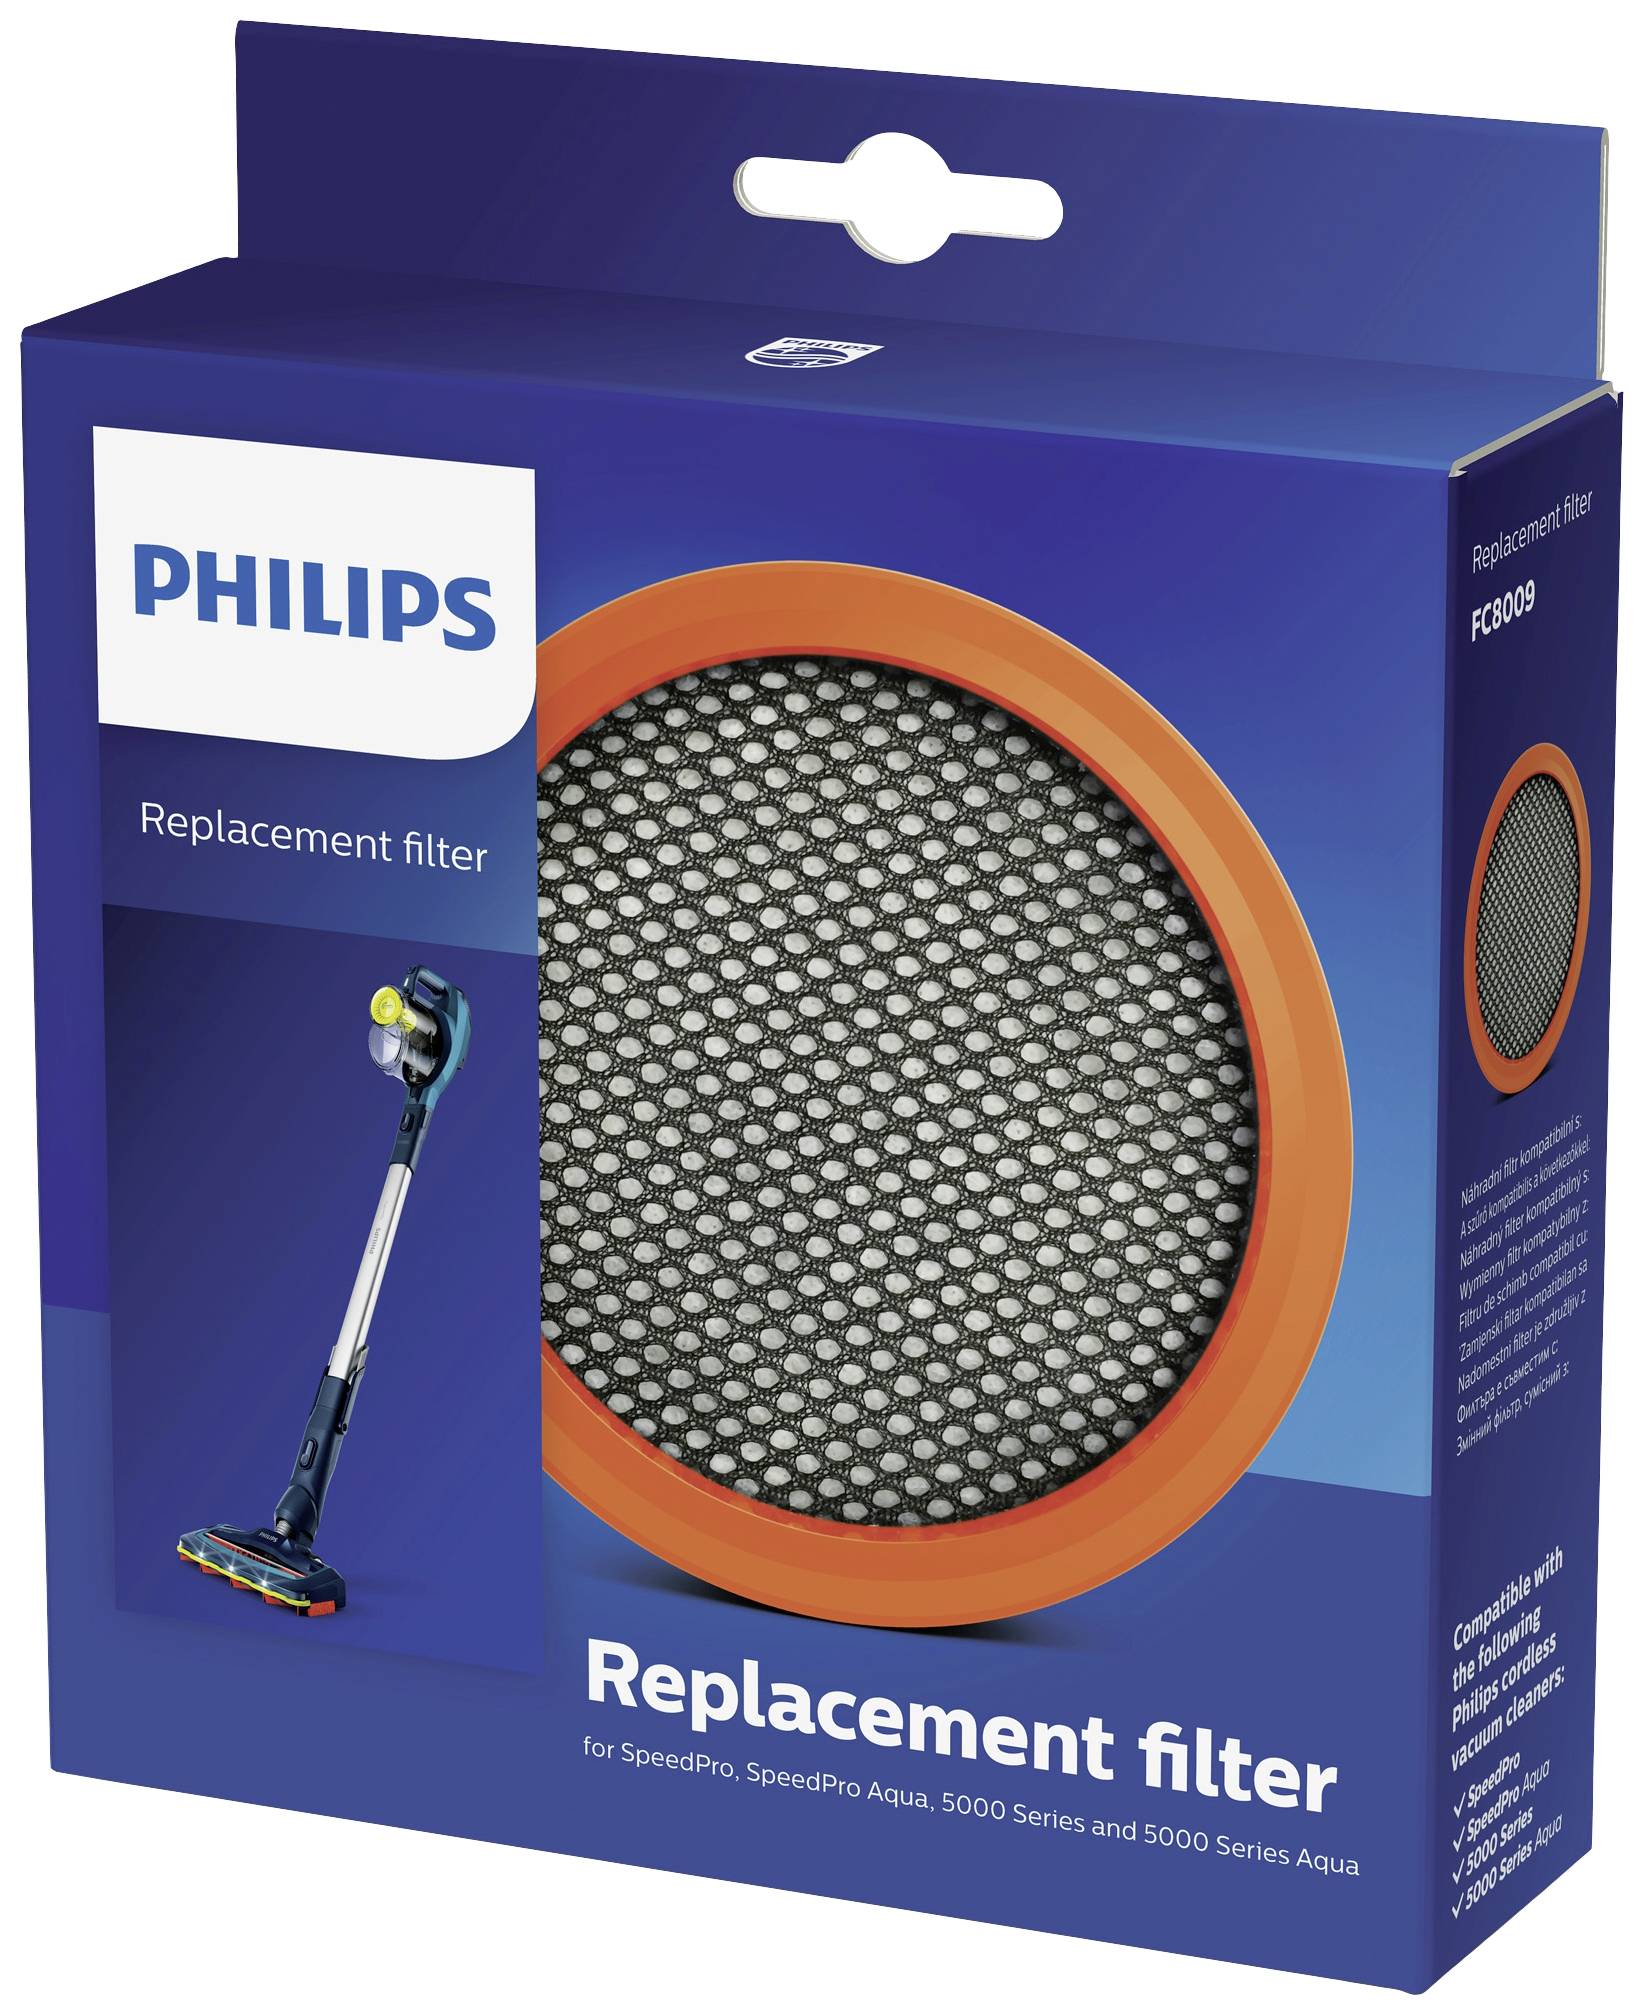 Less than Upbringing Empty the trash Philips Ersatzfilterset Filter change kit 1 pc(s) | Conrad.com